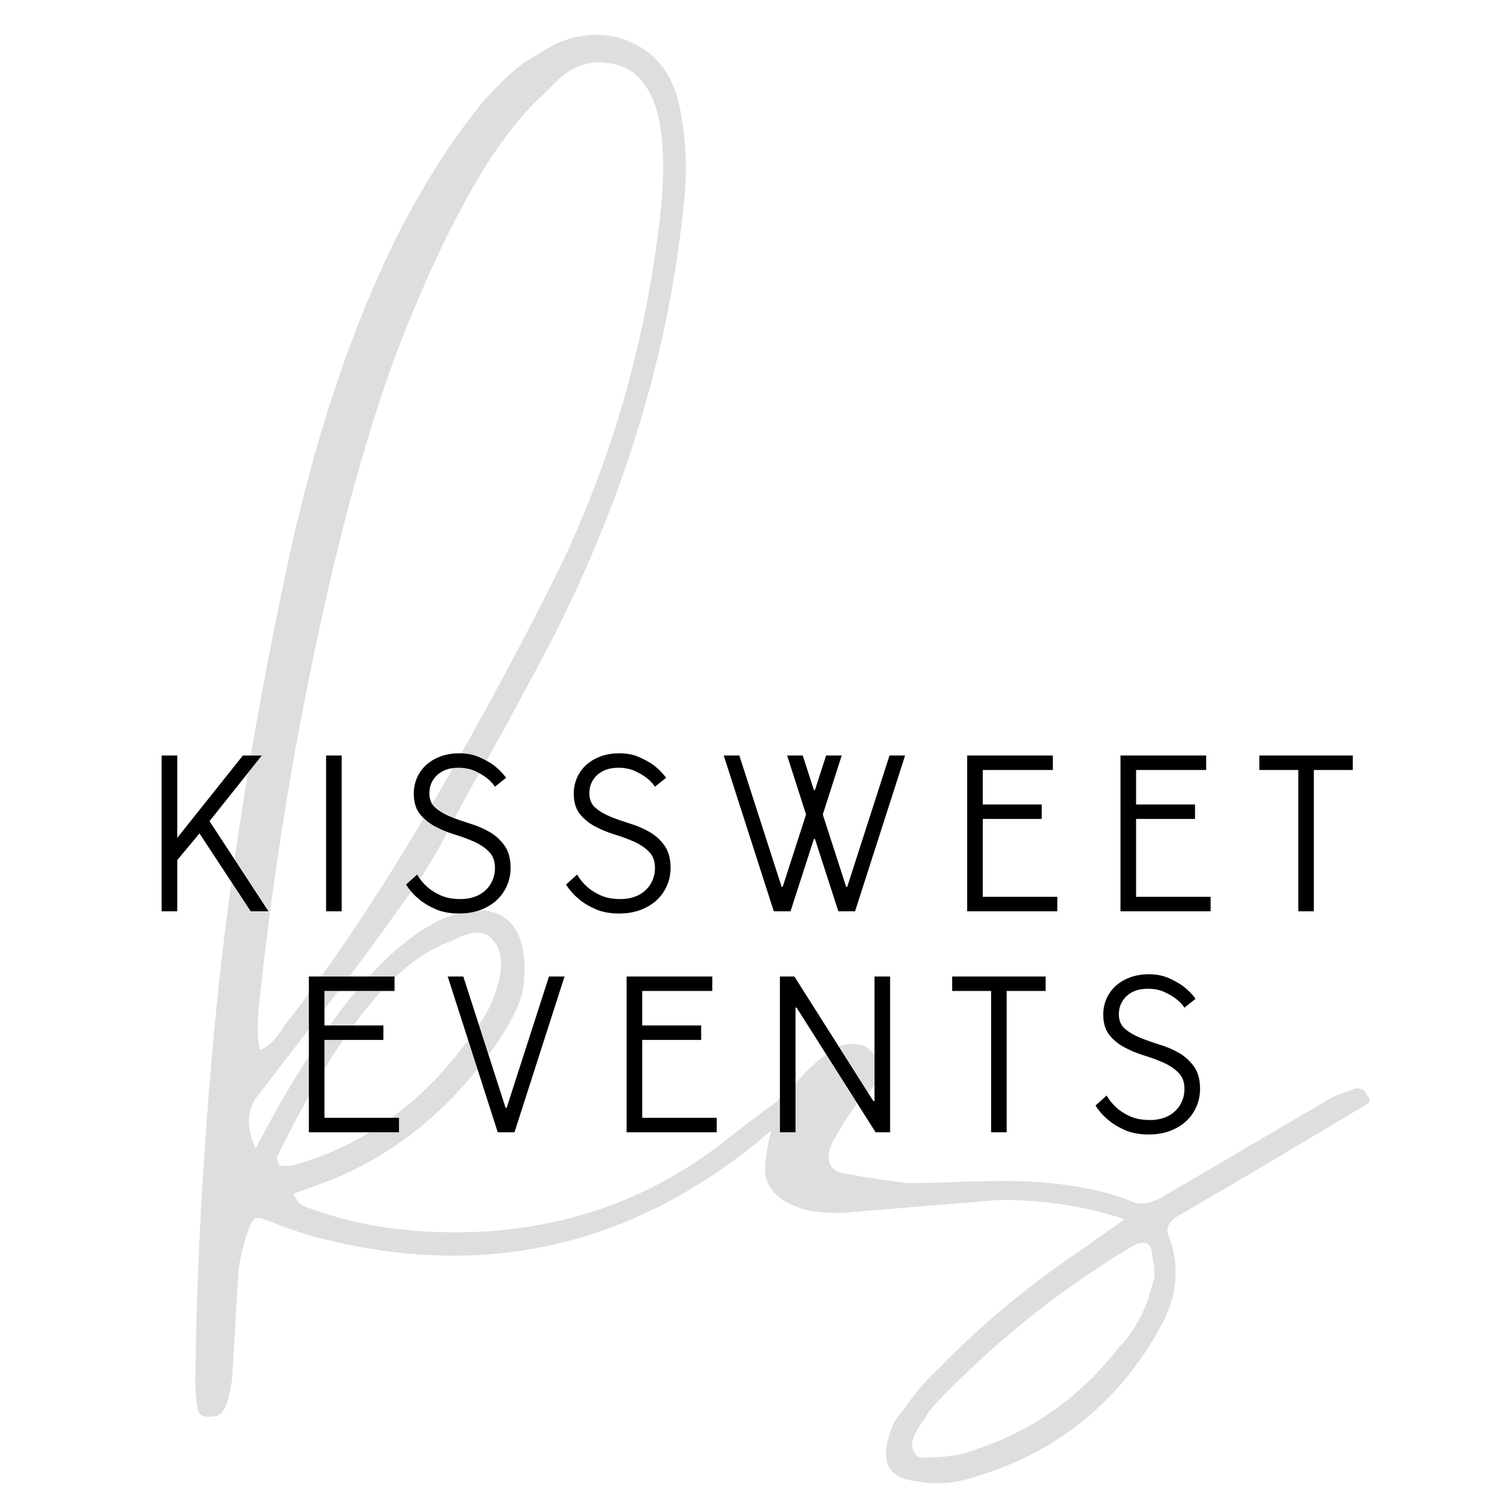 Kissweet Events